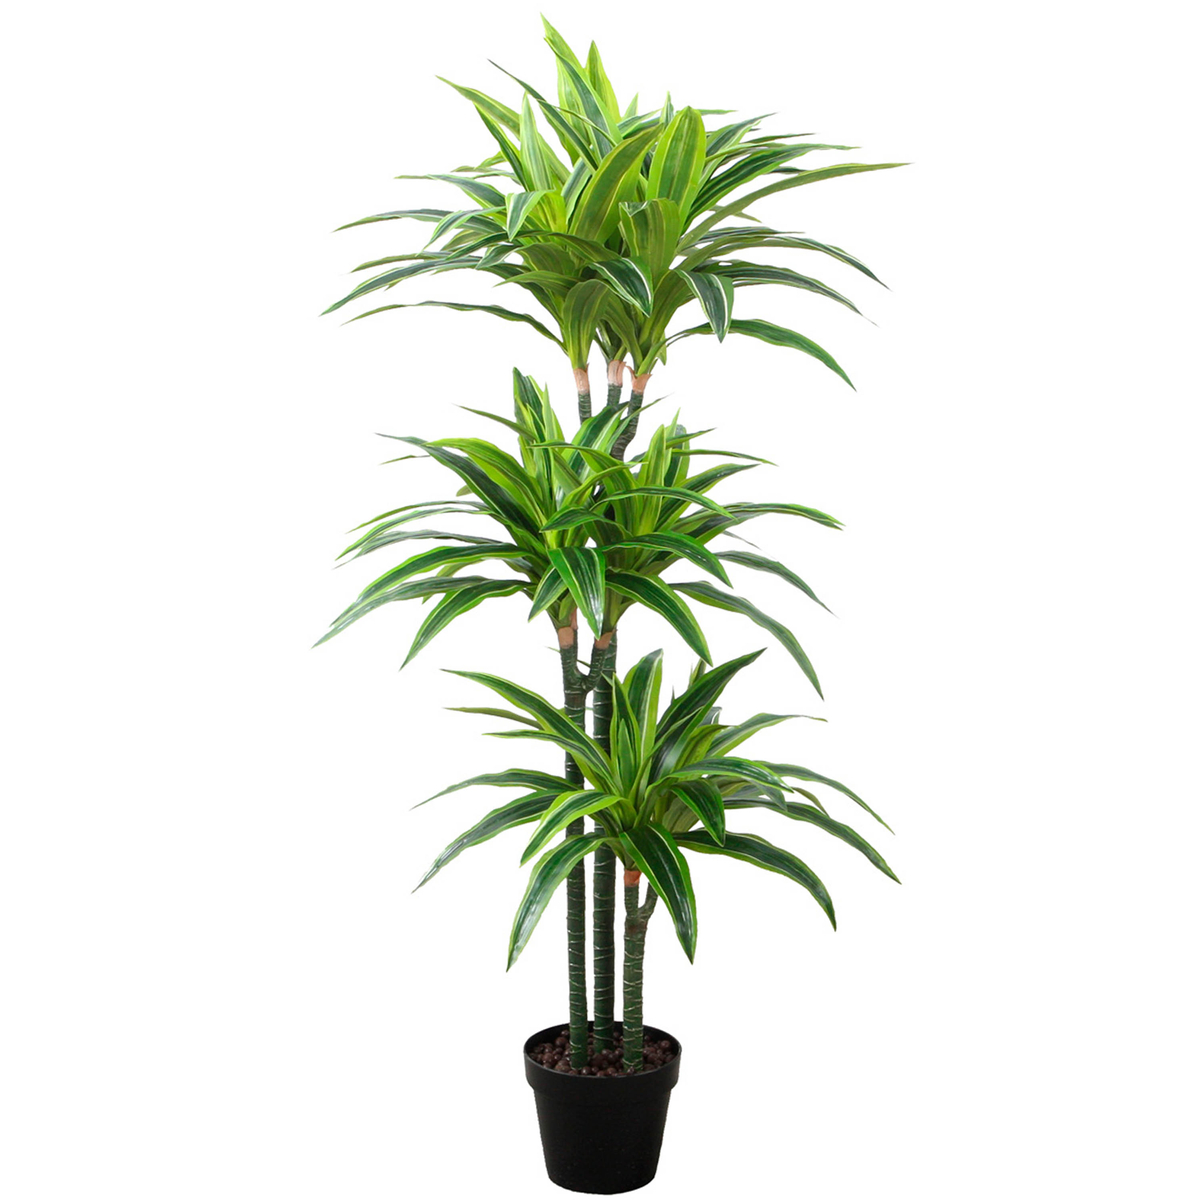 javed planta palo de brasil de polietileno artificial 120 x 50 cm con maceta de plástico